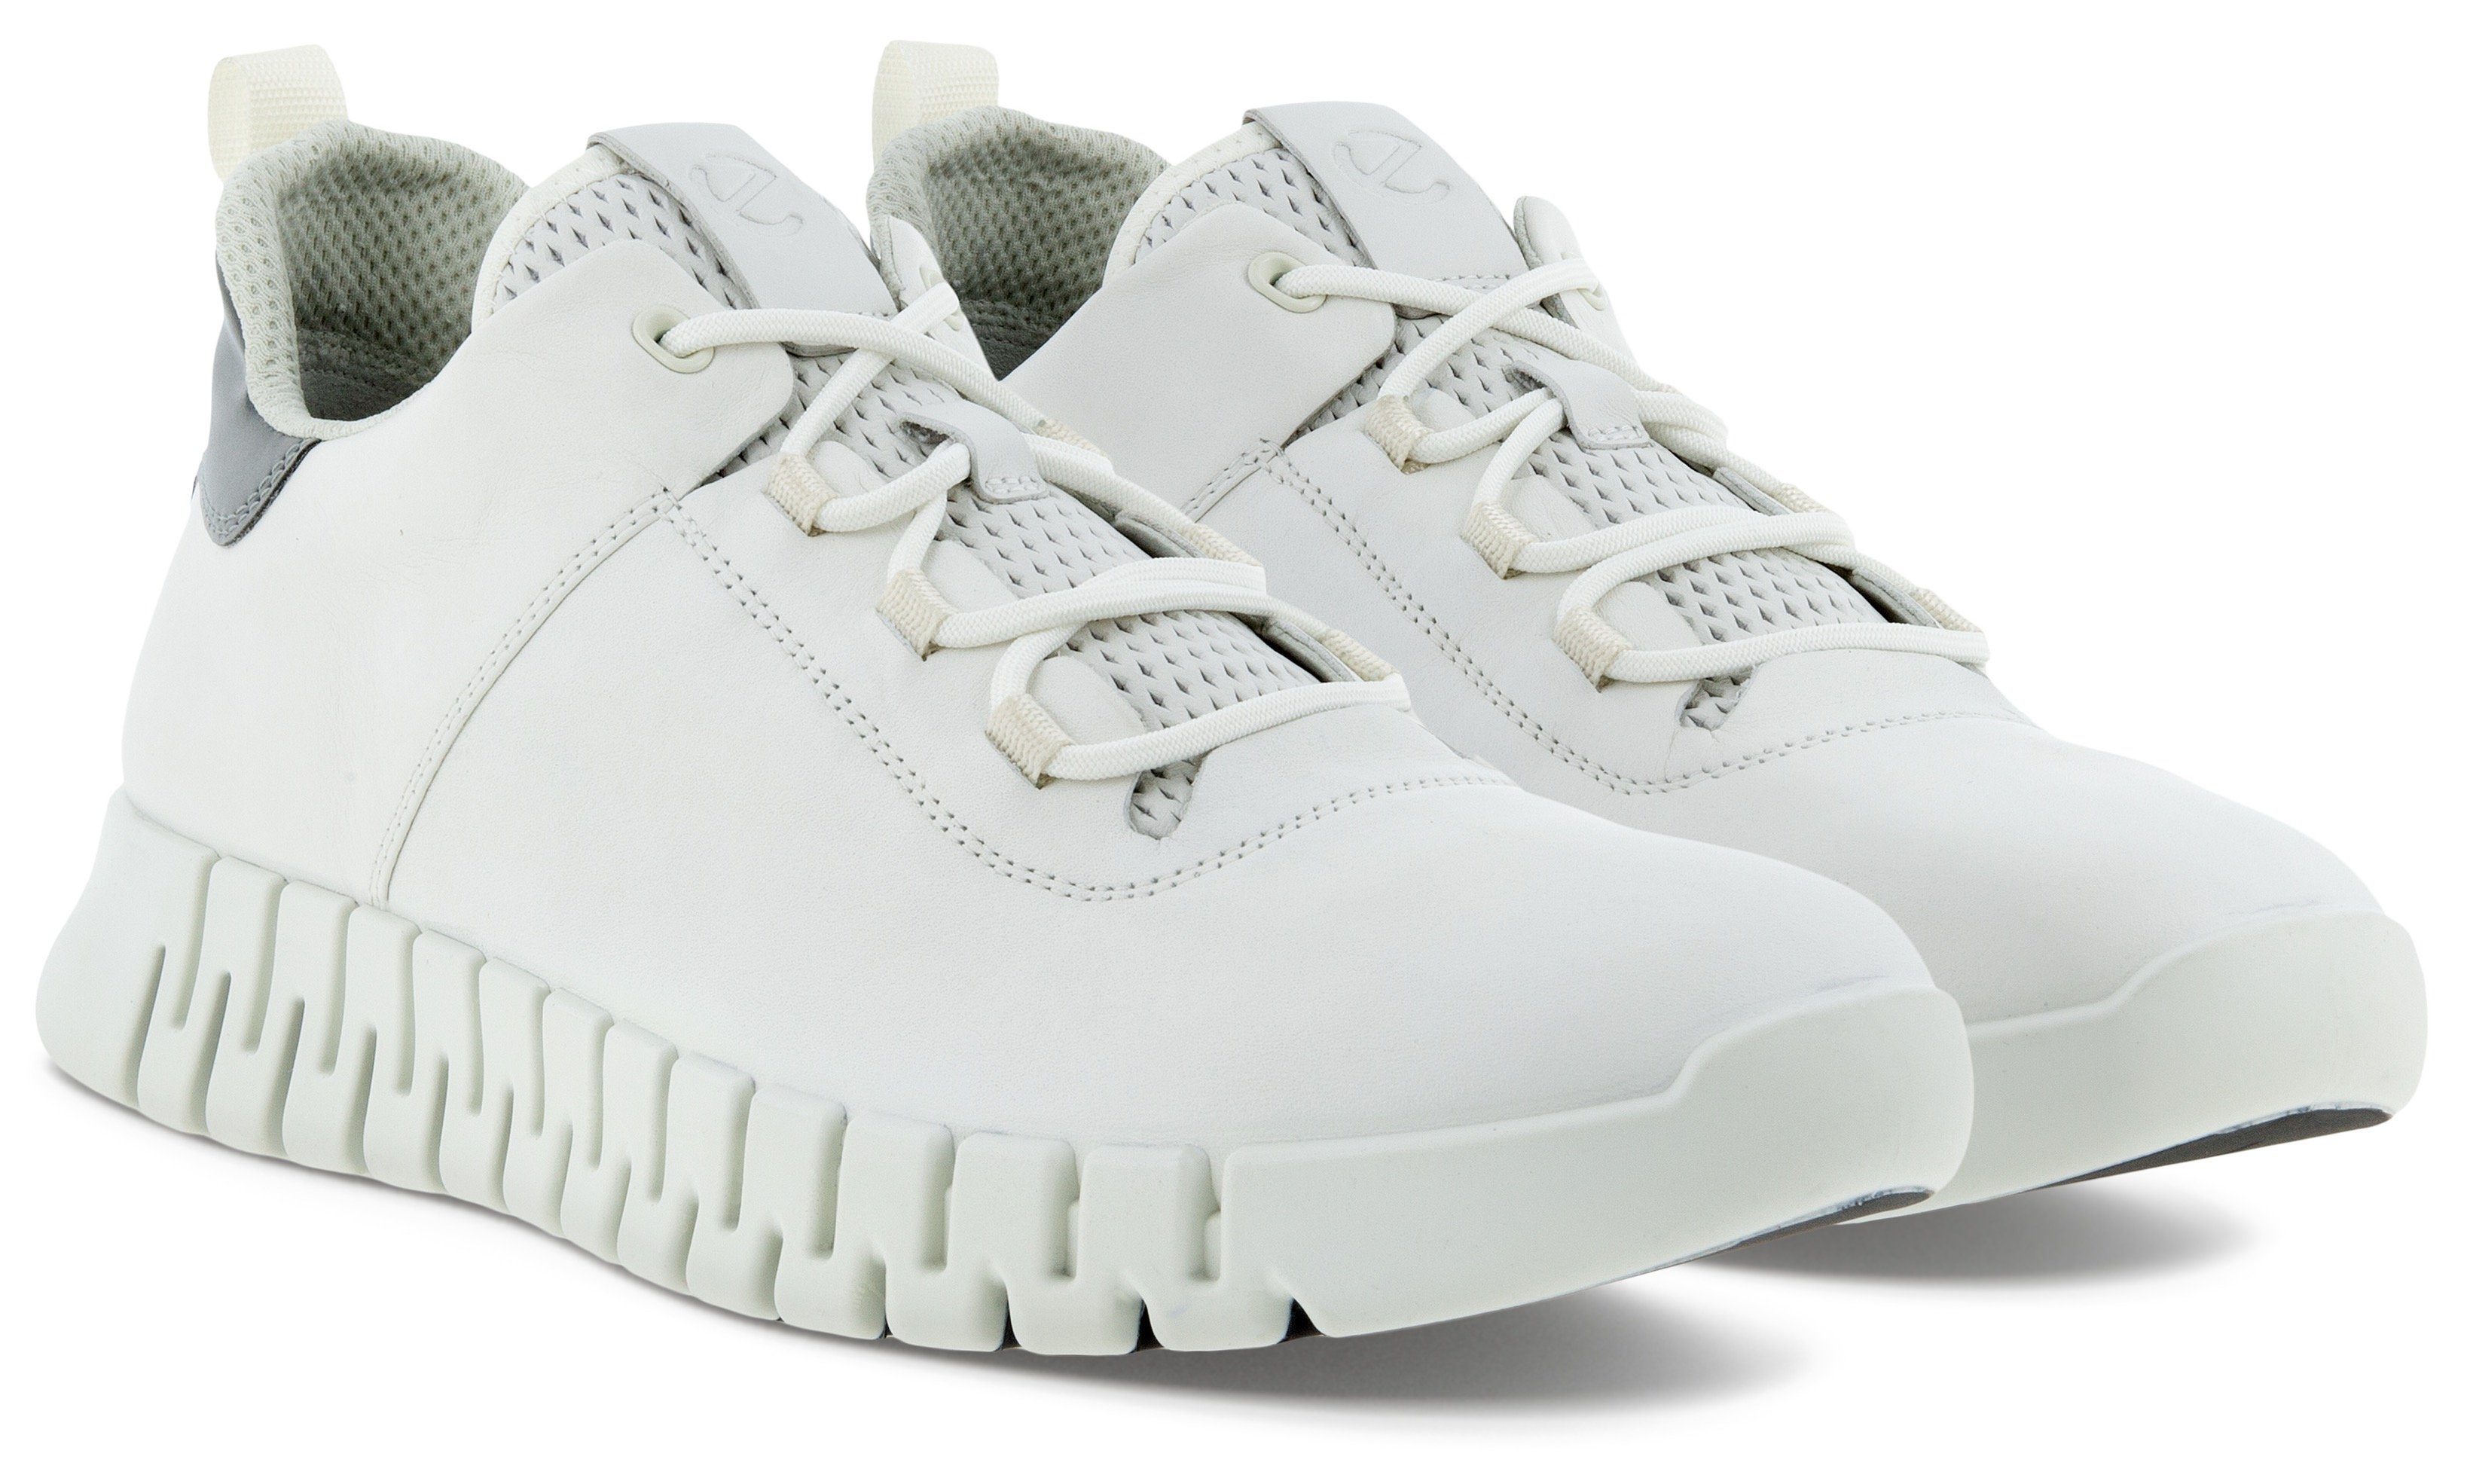 Ecco GRUUV M dual fit-Innensohle Sneaker weiß herausnehmbarer mit